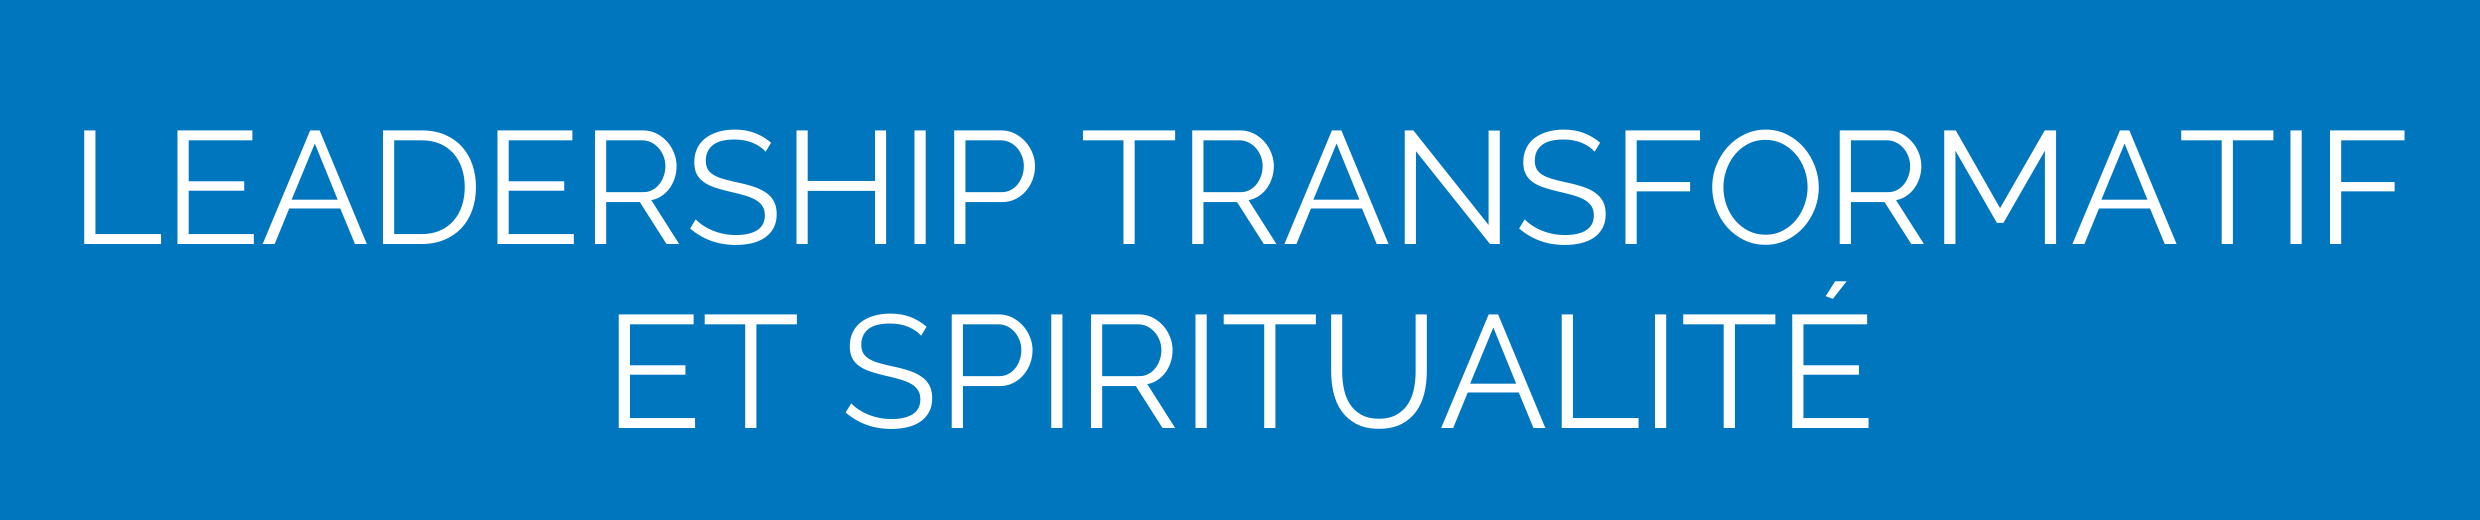 Leadership transformatif et spiritualité